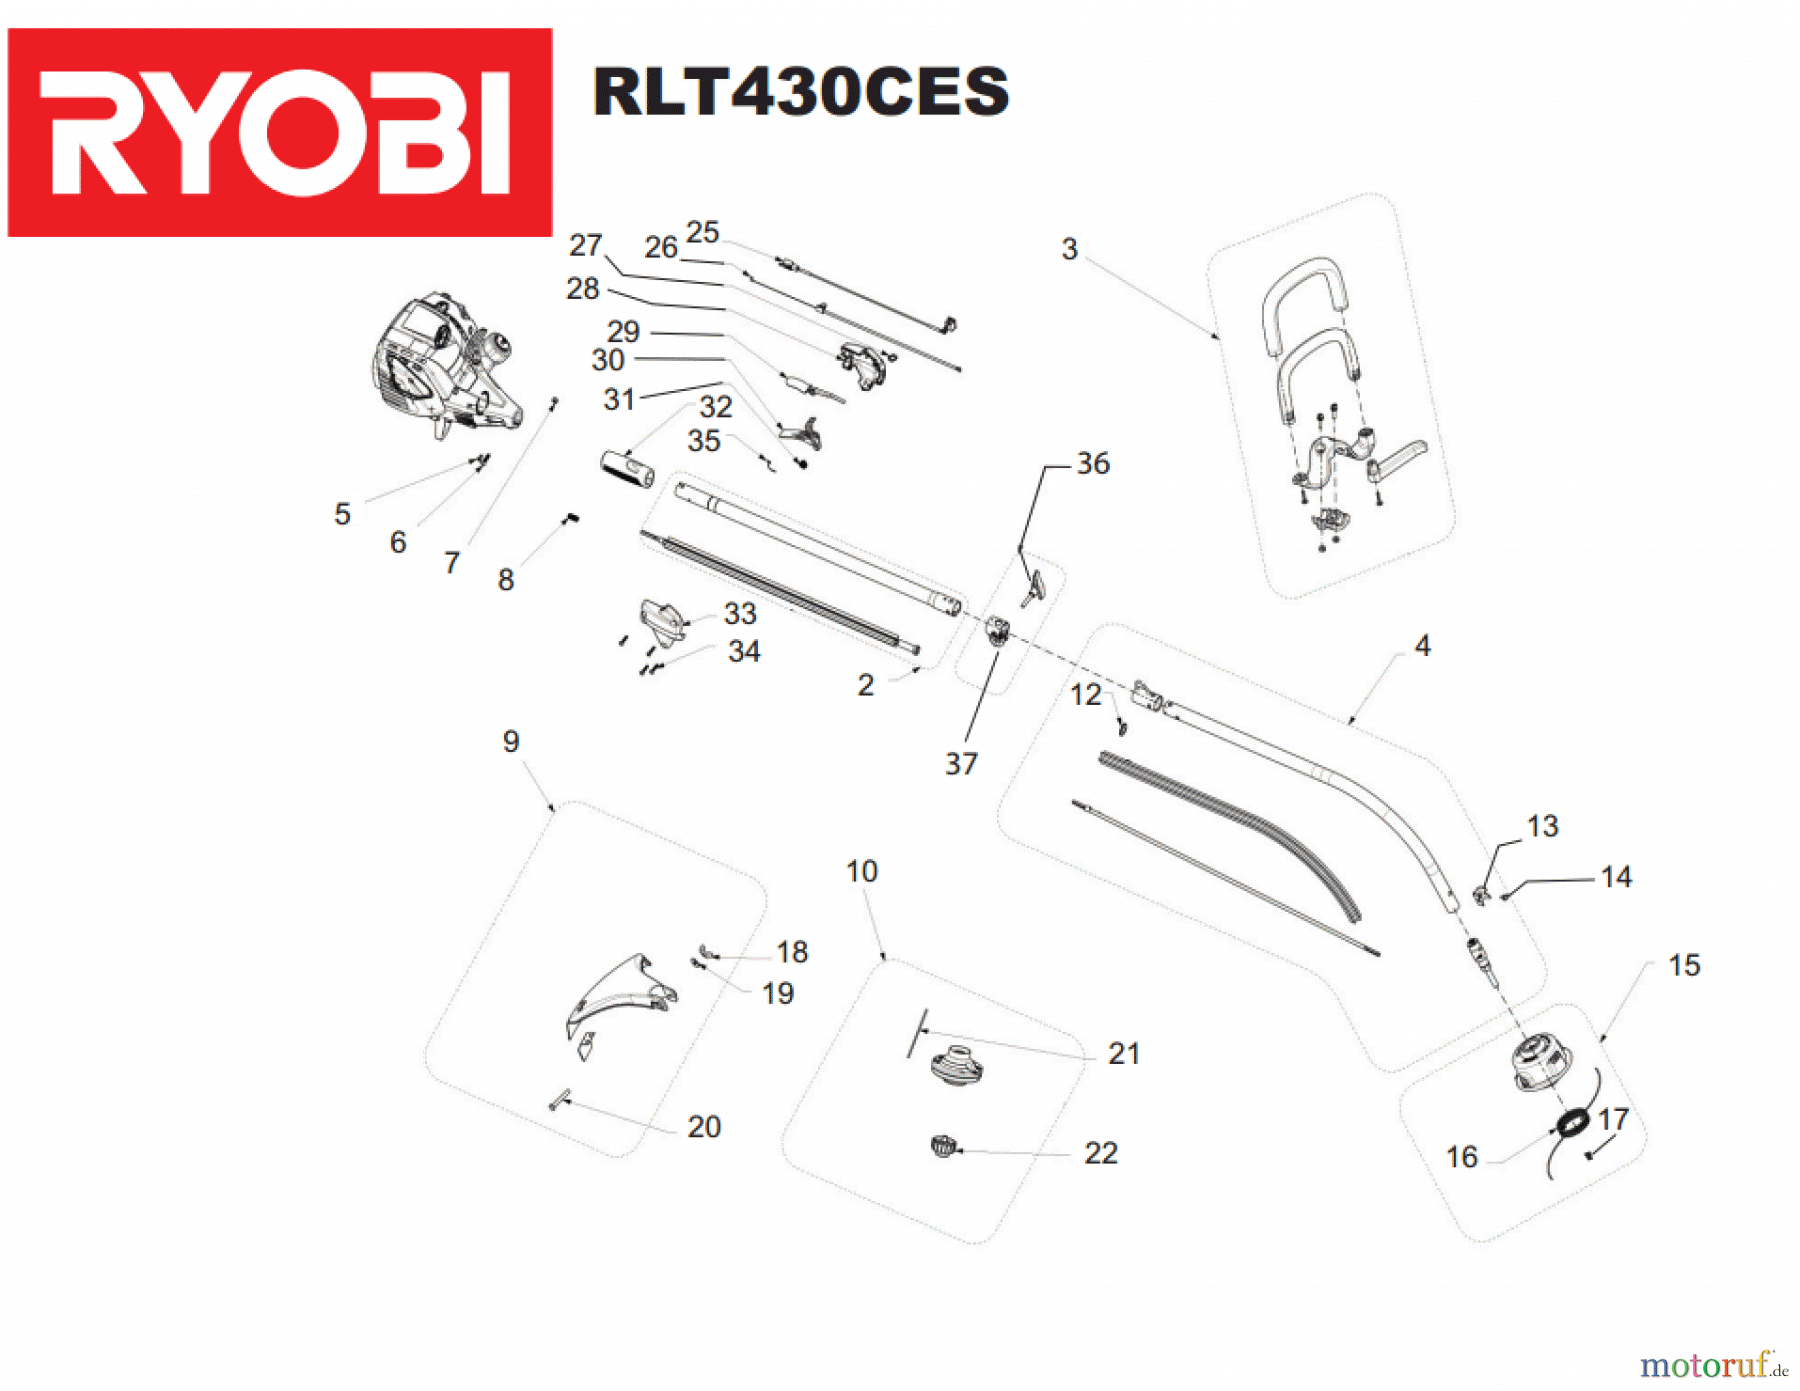  Ryobi Rasentrimmer Benzin RLT430CES Seite 1